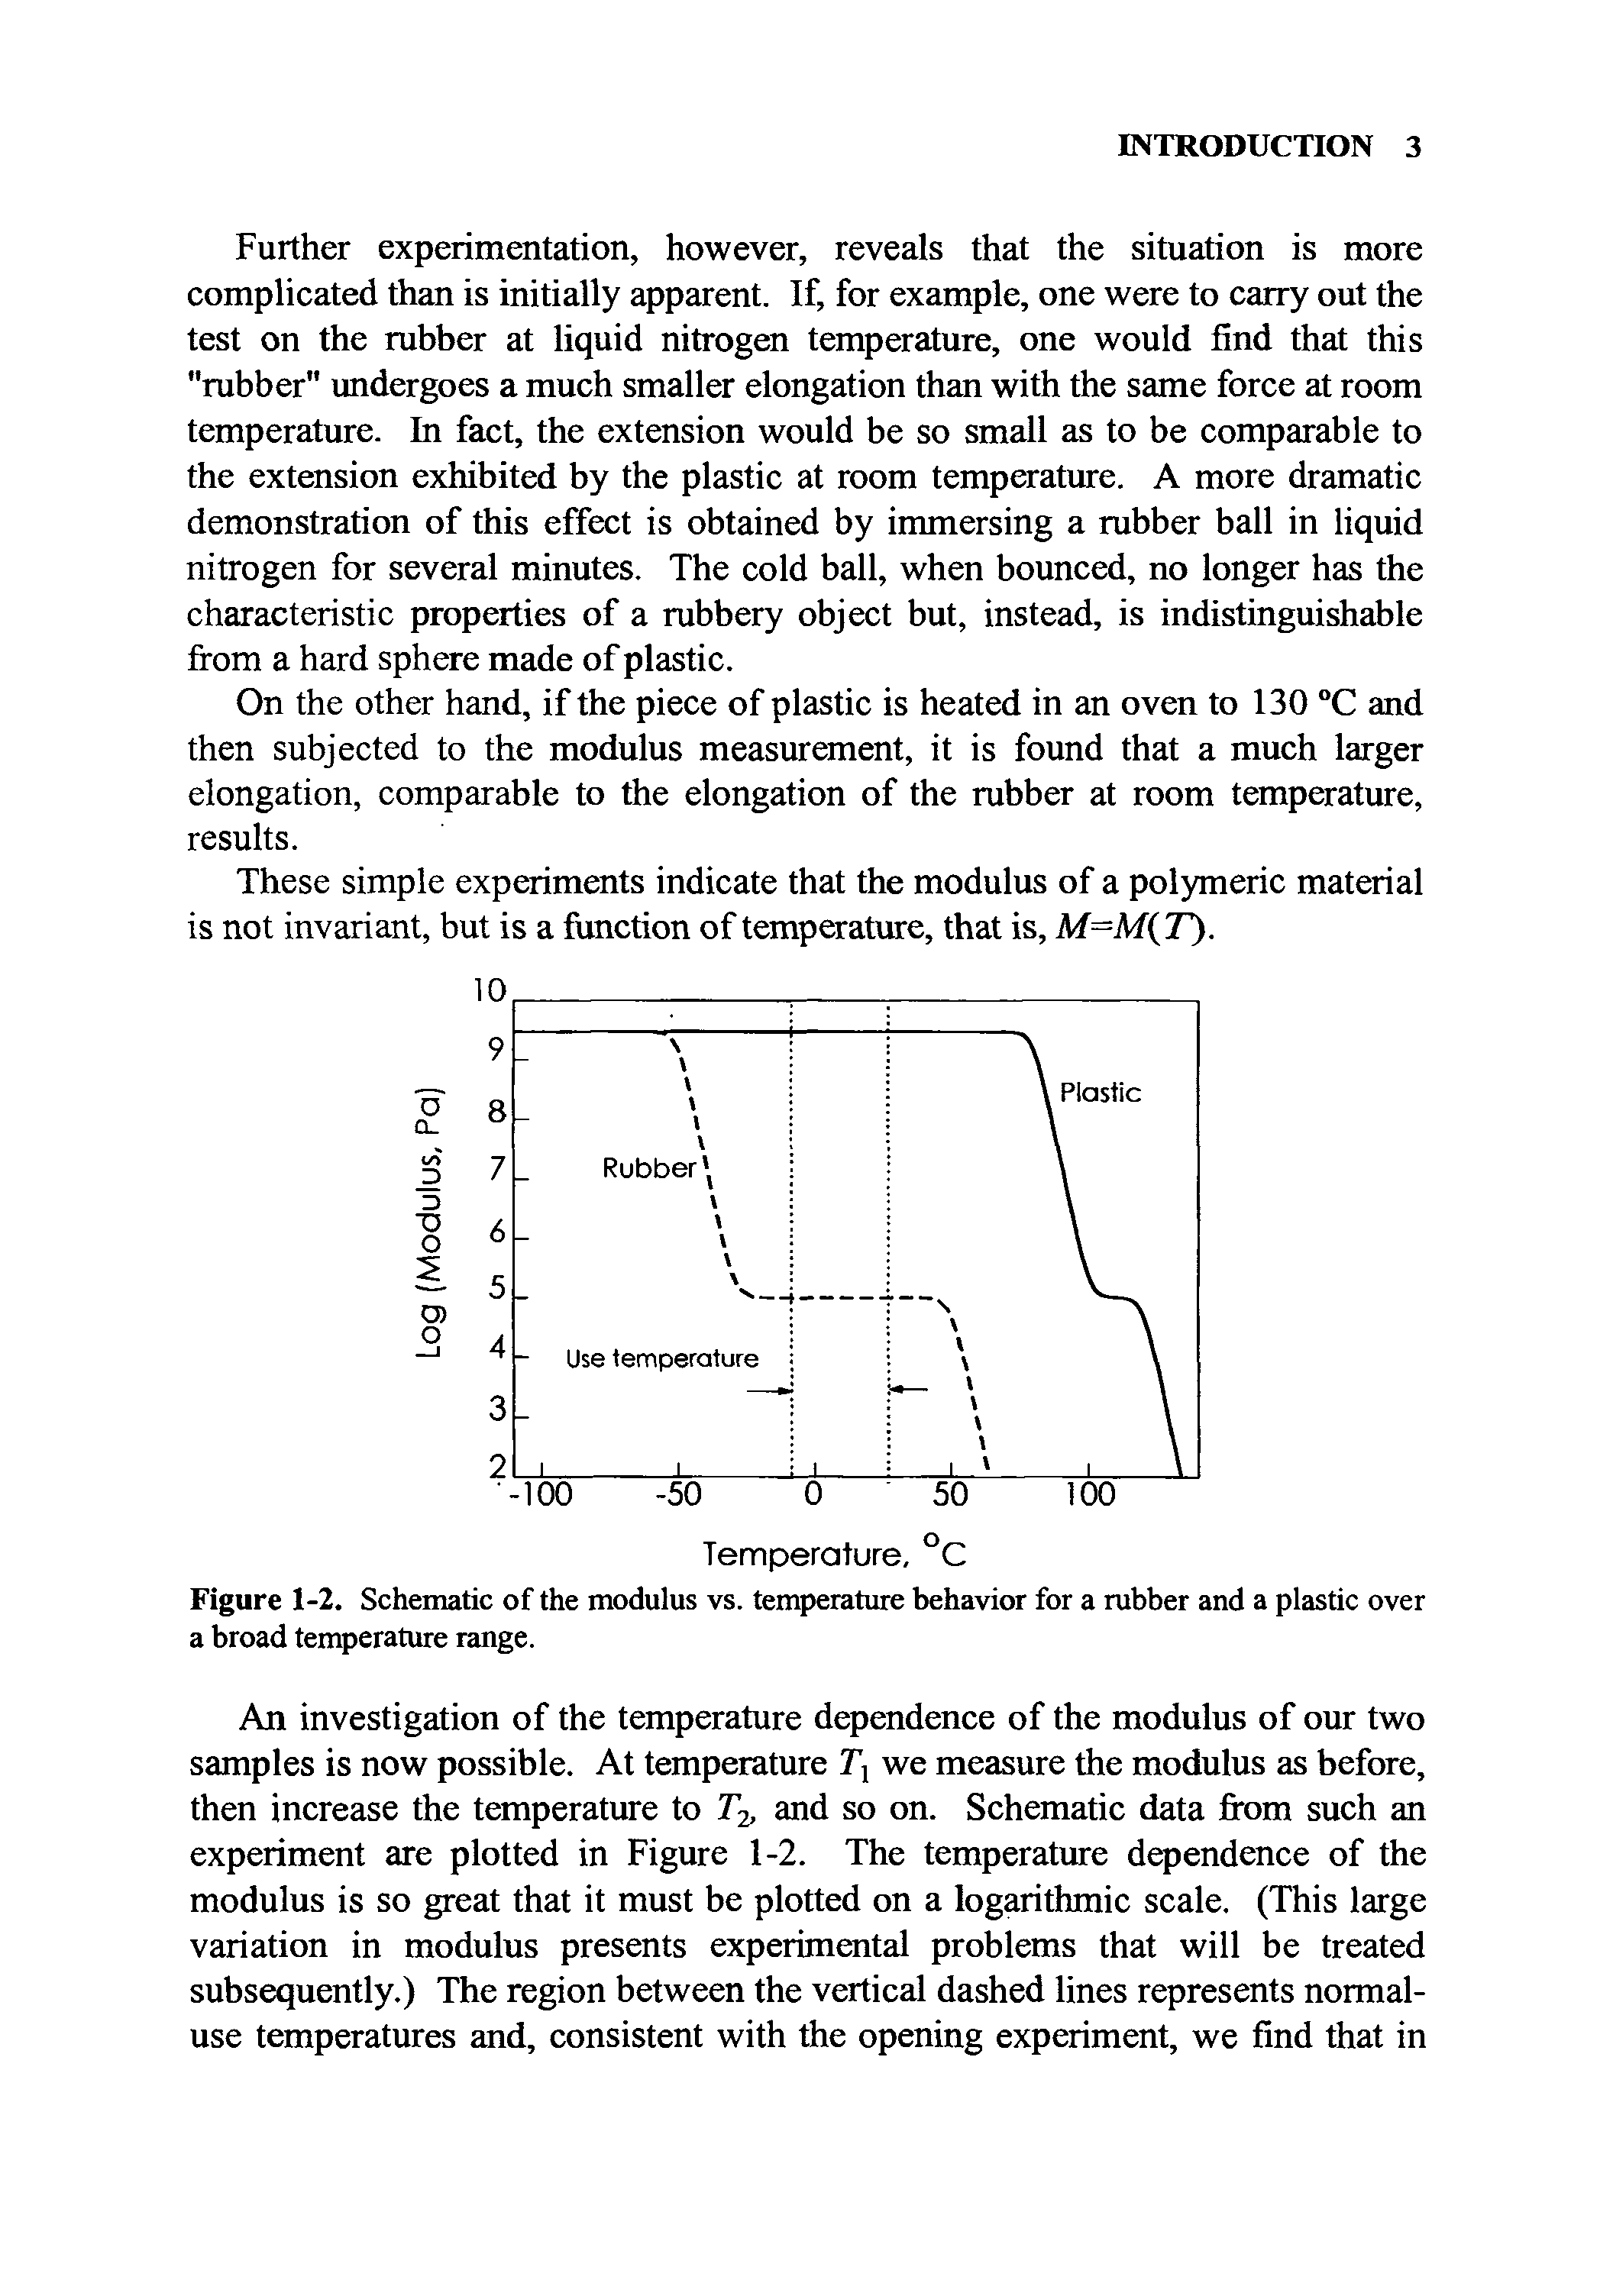 Figure 1-2. Schematic of the modulus vs. temperature behavior for a rubber and a plastic over a broad temperature range.